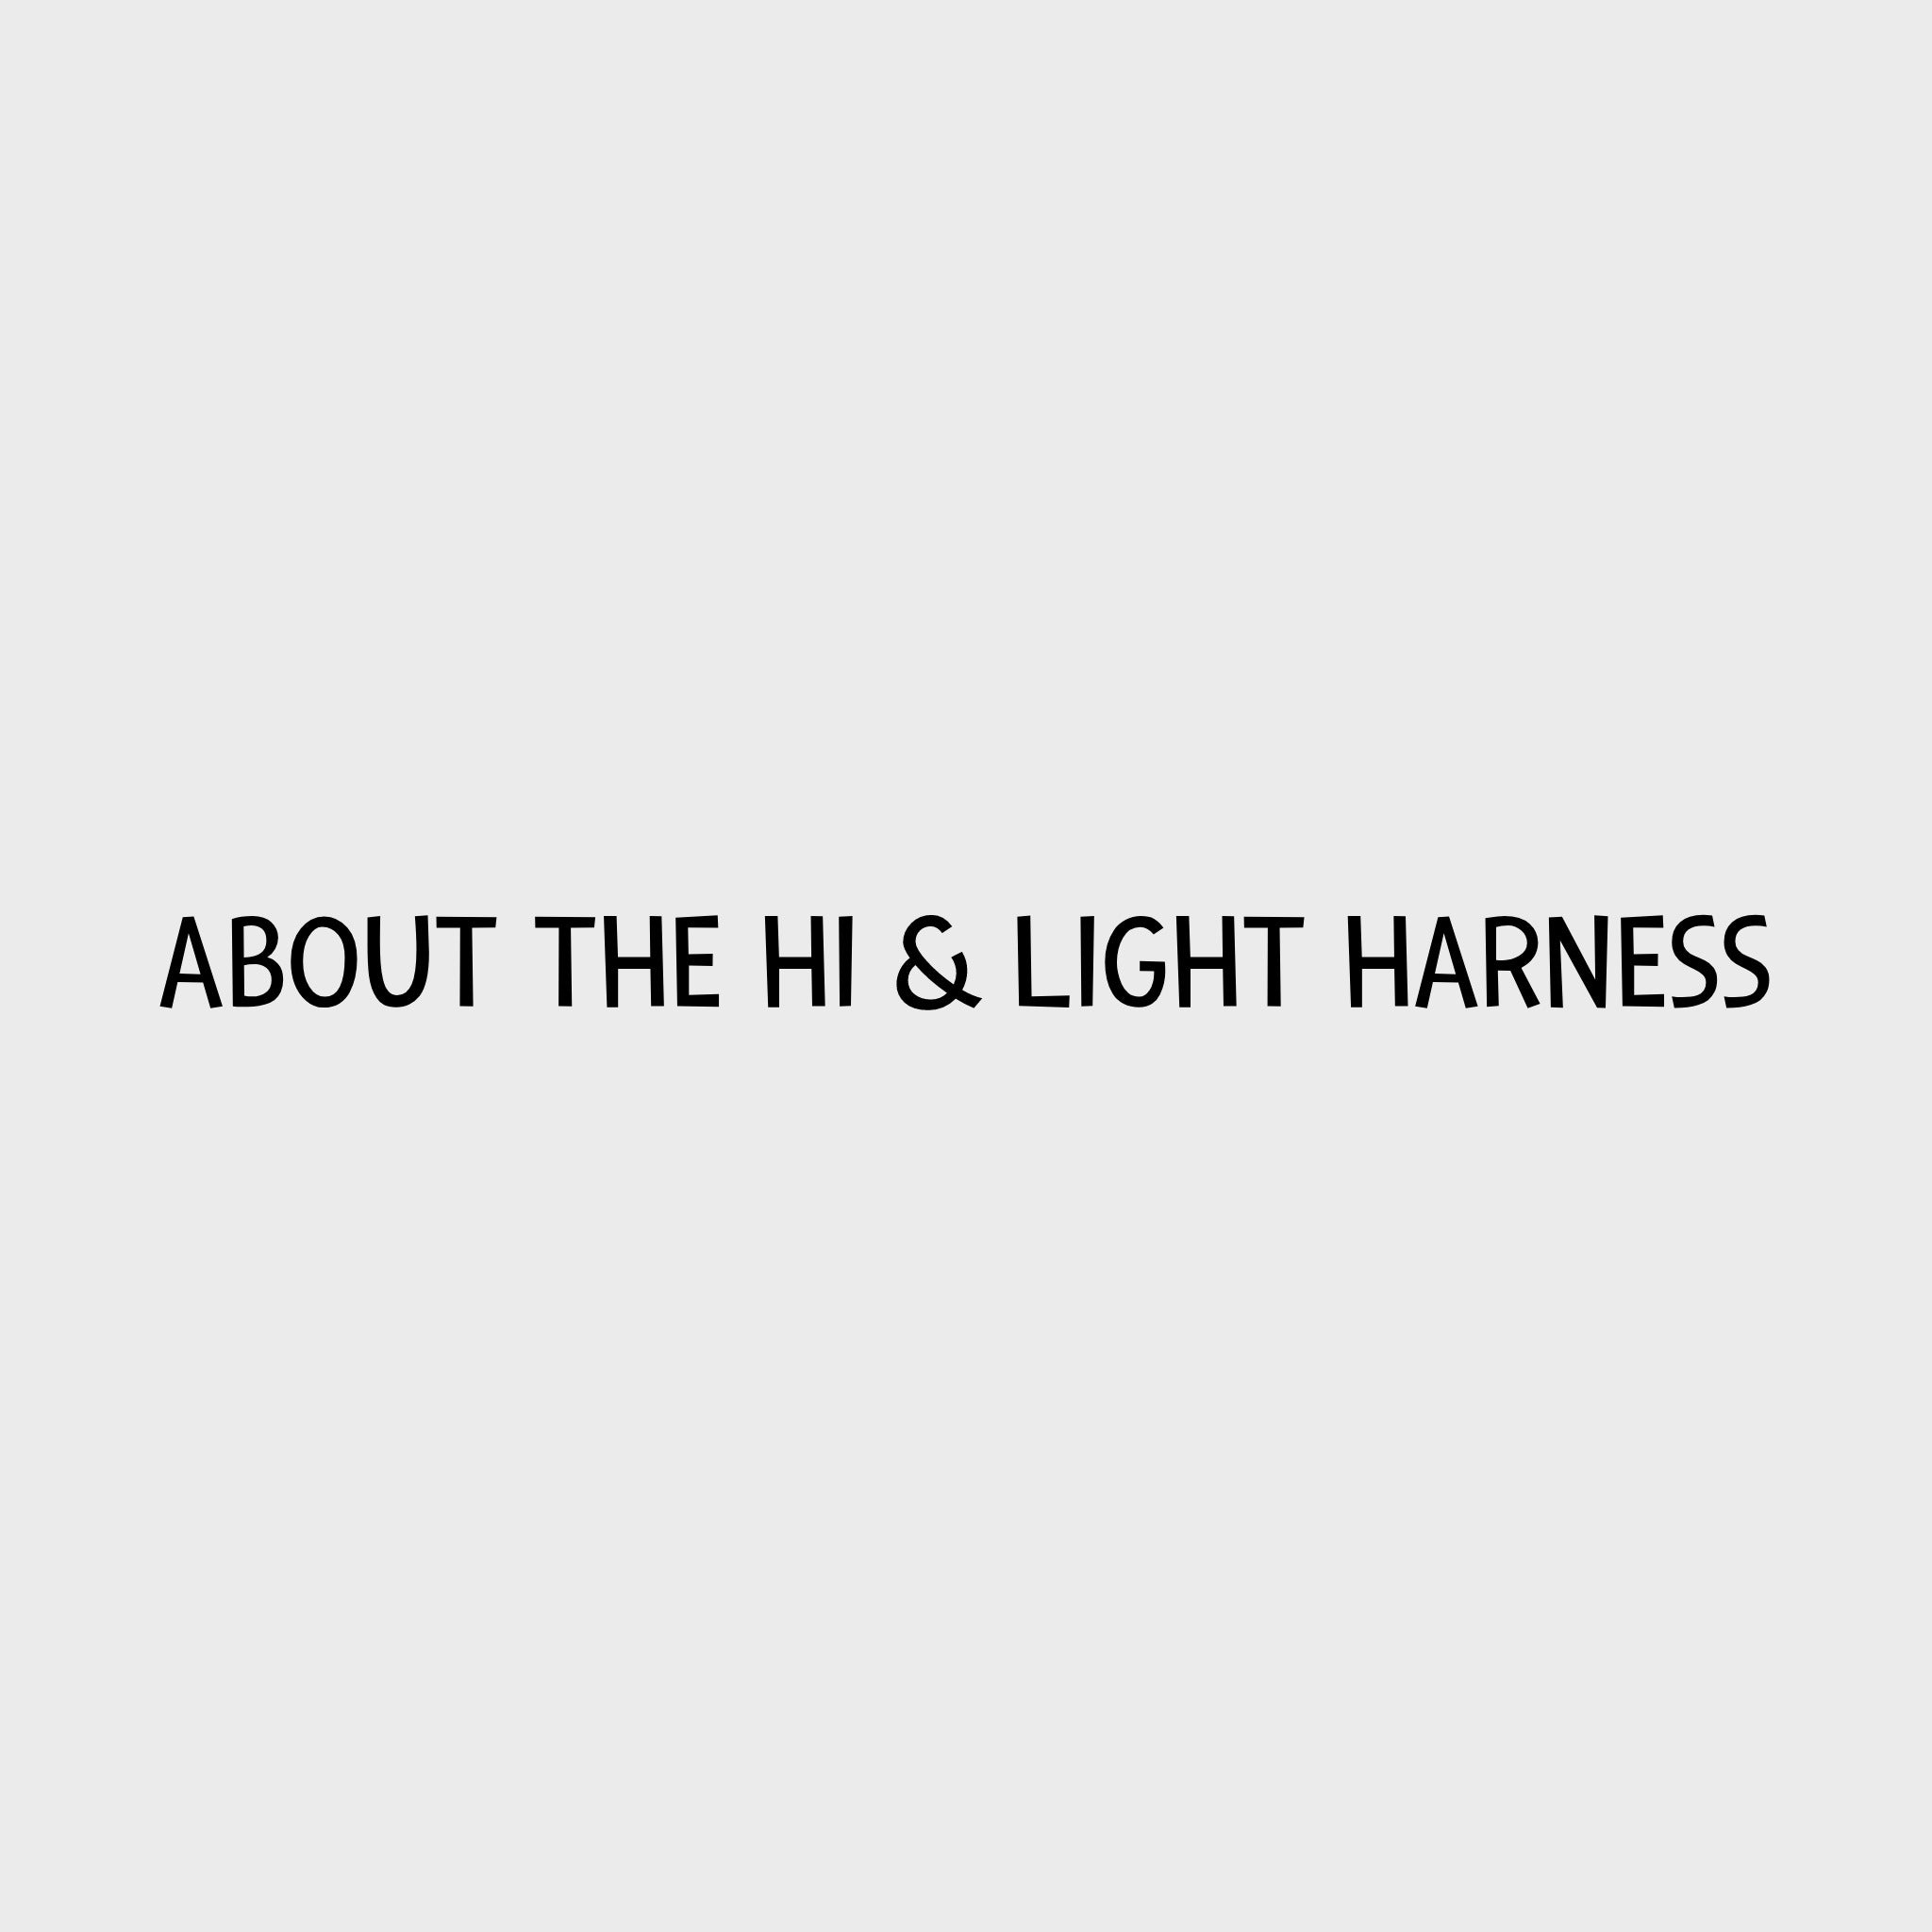 Video - Ruffwear Hi & Light Harness